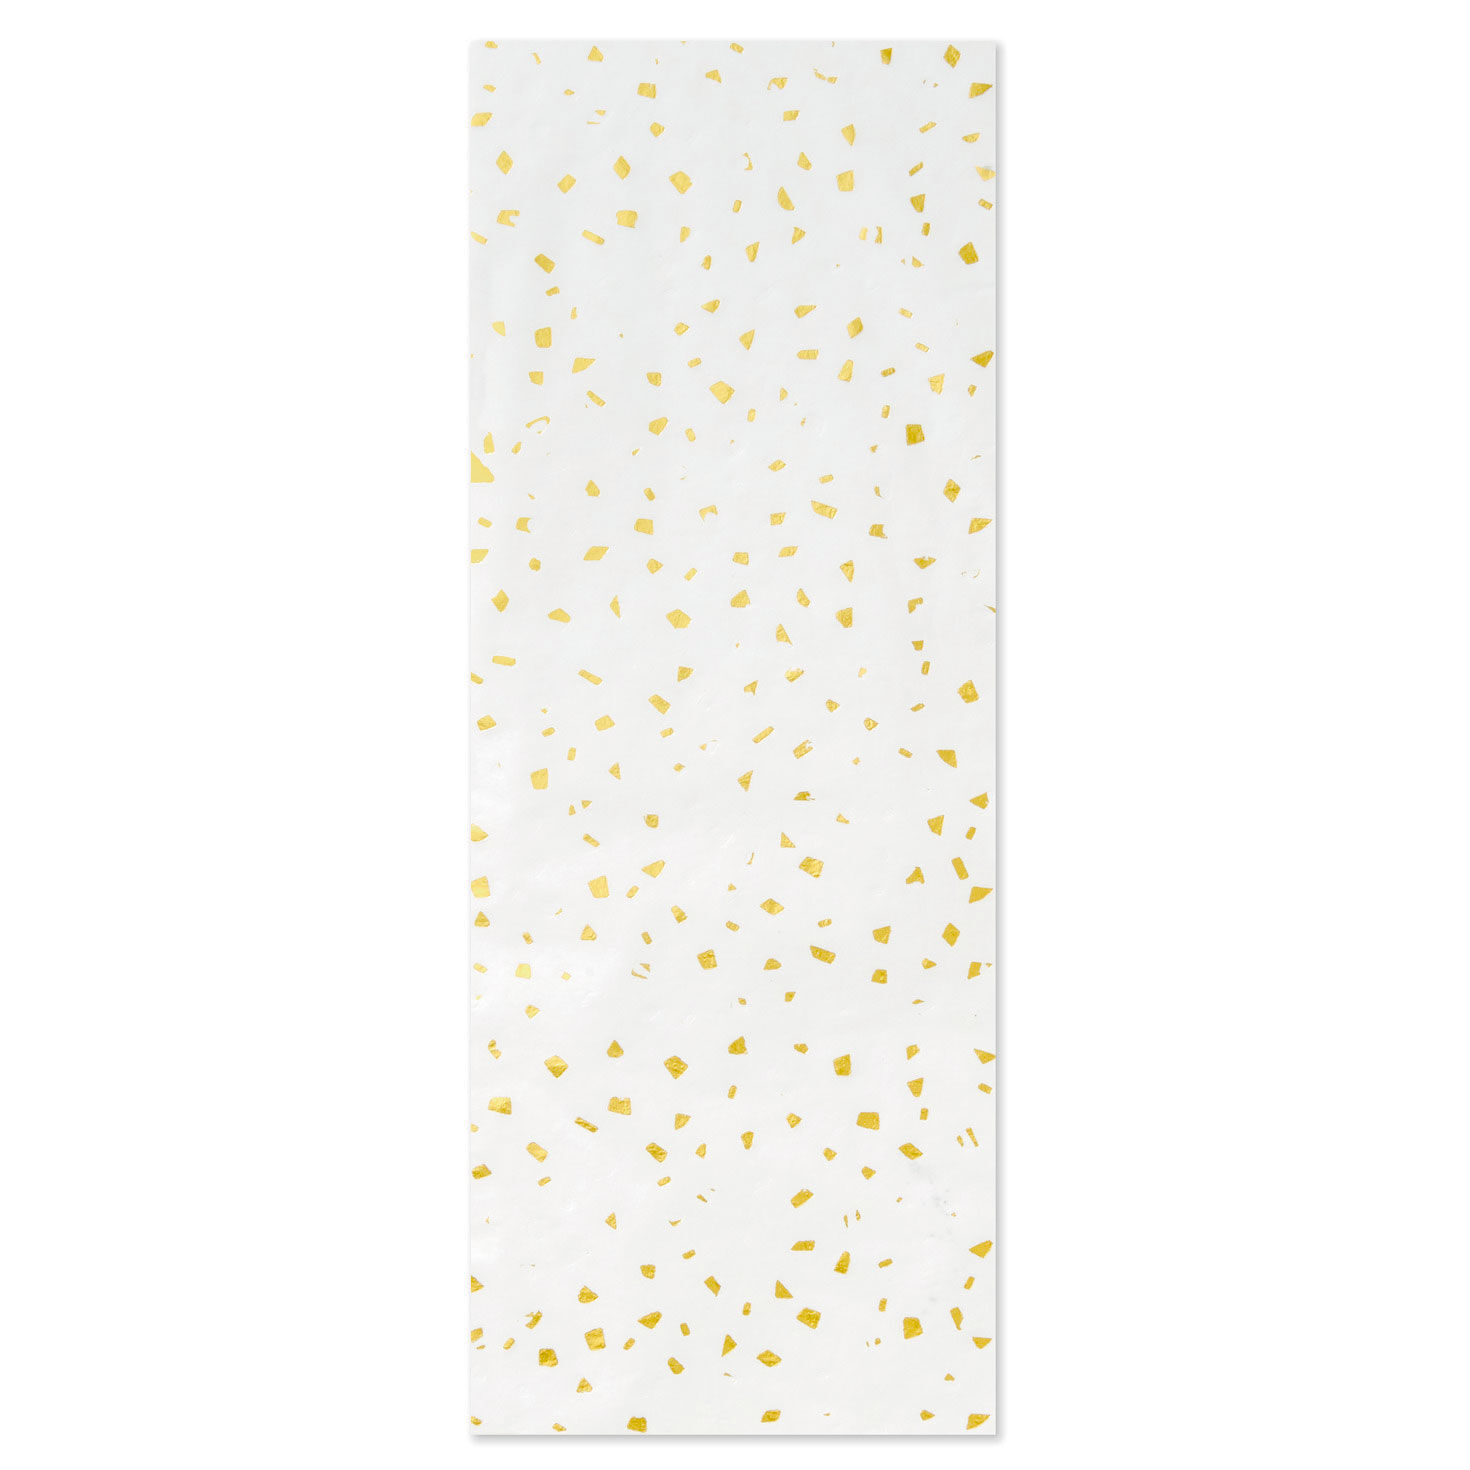 Gold Foil Flecks on White Tissue Paper, 4 sheets - Tissue - Hallmark